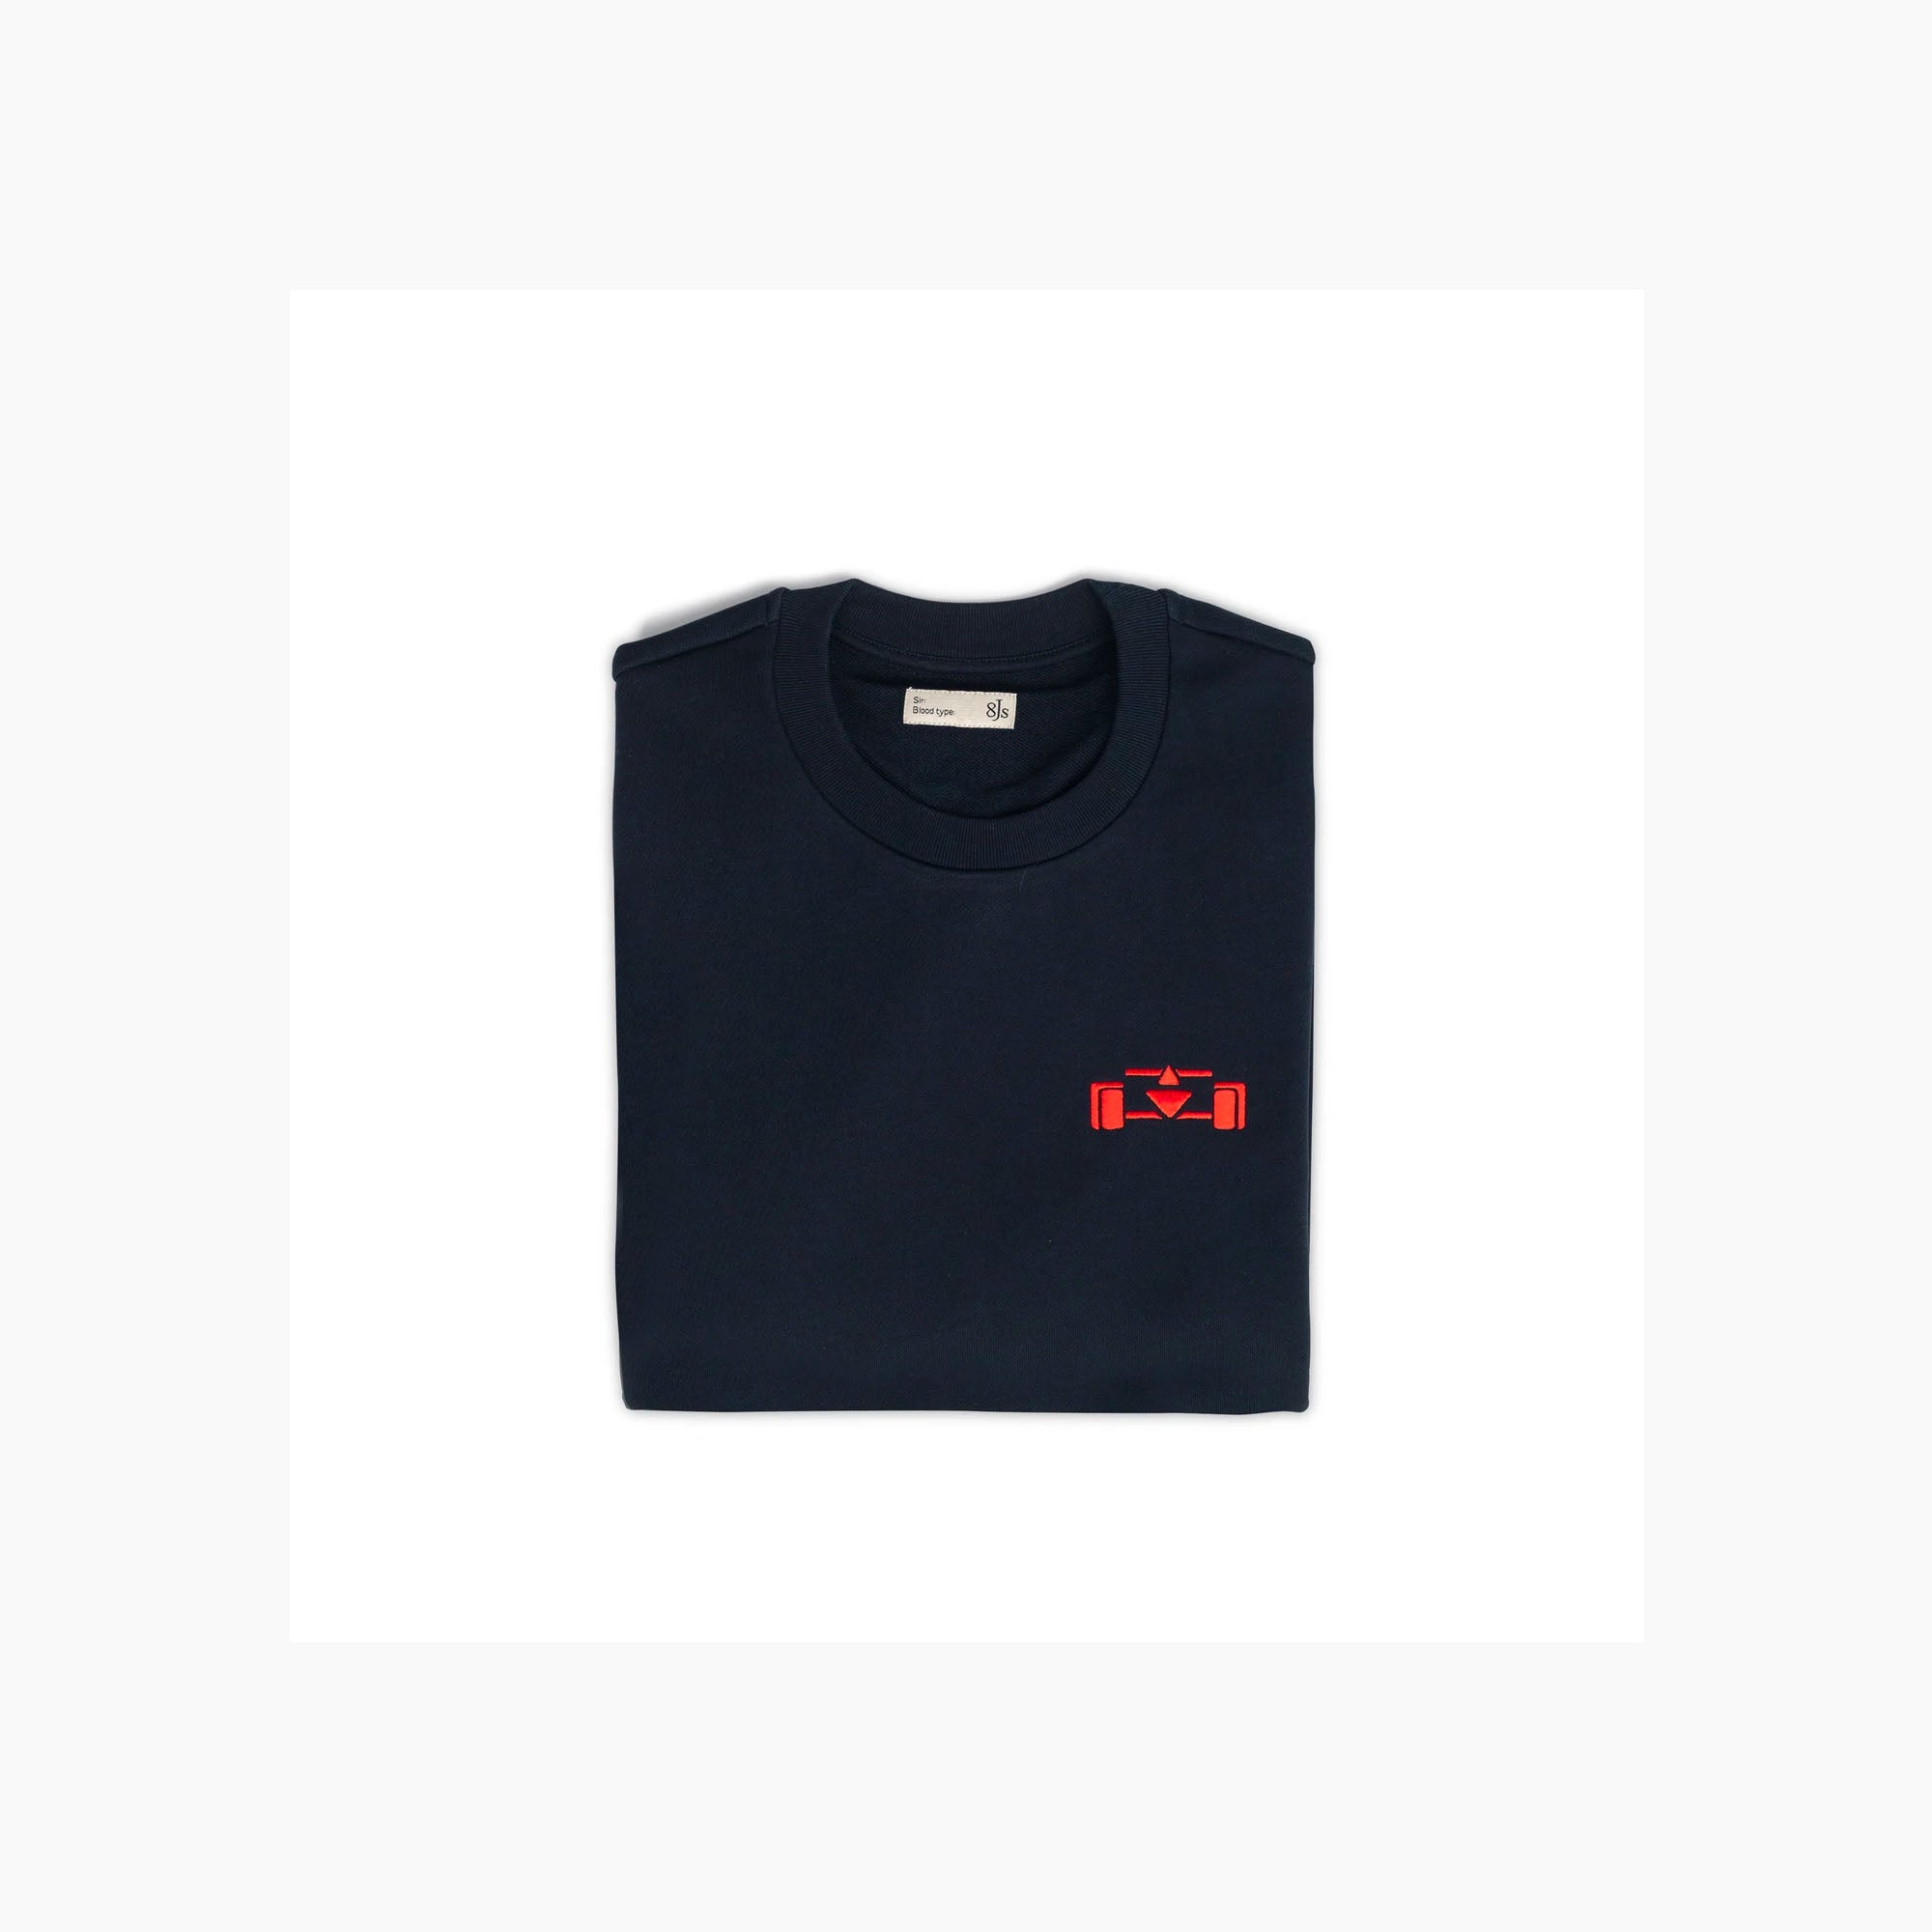 8JS | Drivers Club Crewneck Navy Sweatshirt-Sweatshirt-8JS-gpx-store